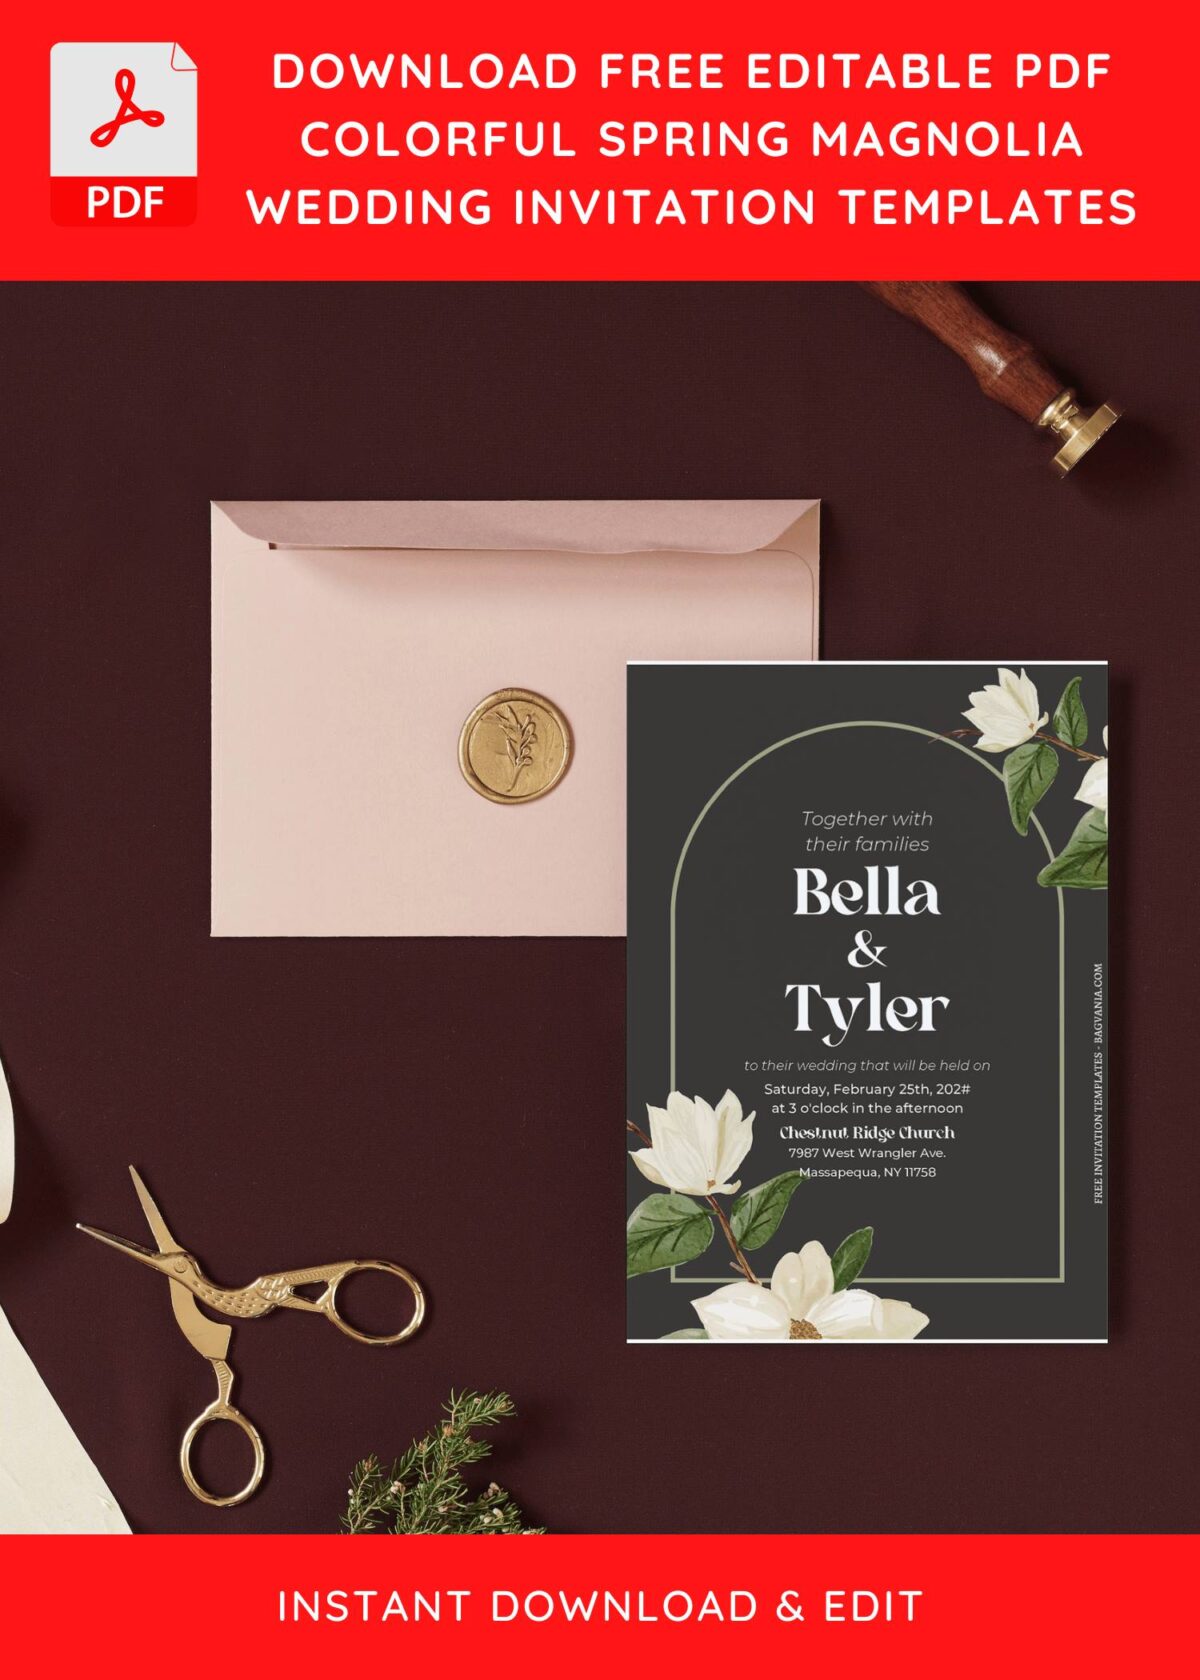 (Free Editable PDF) Elegant Floral Frame Magnolia Wedding Invitation Templates I